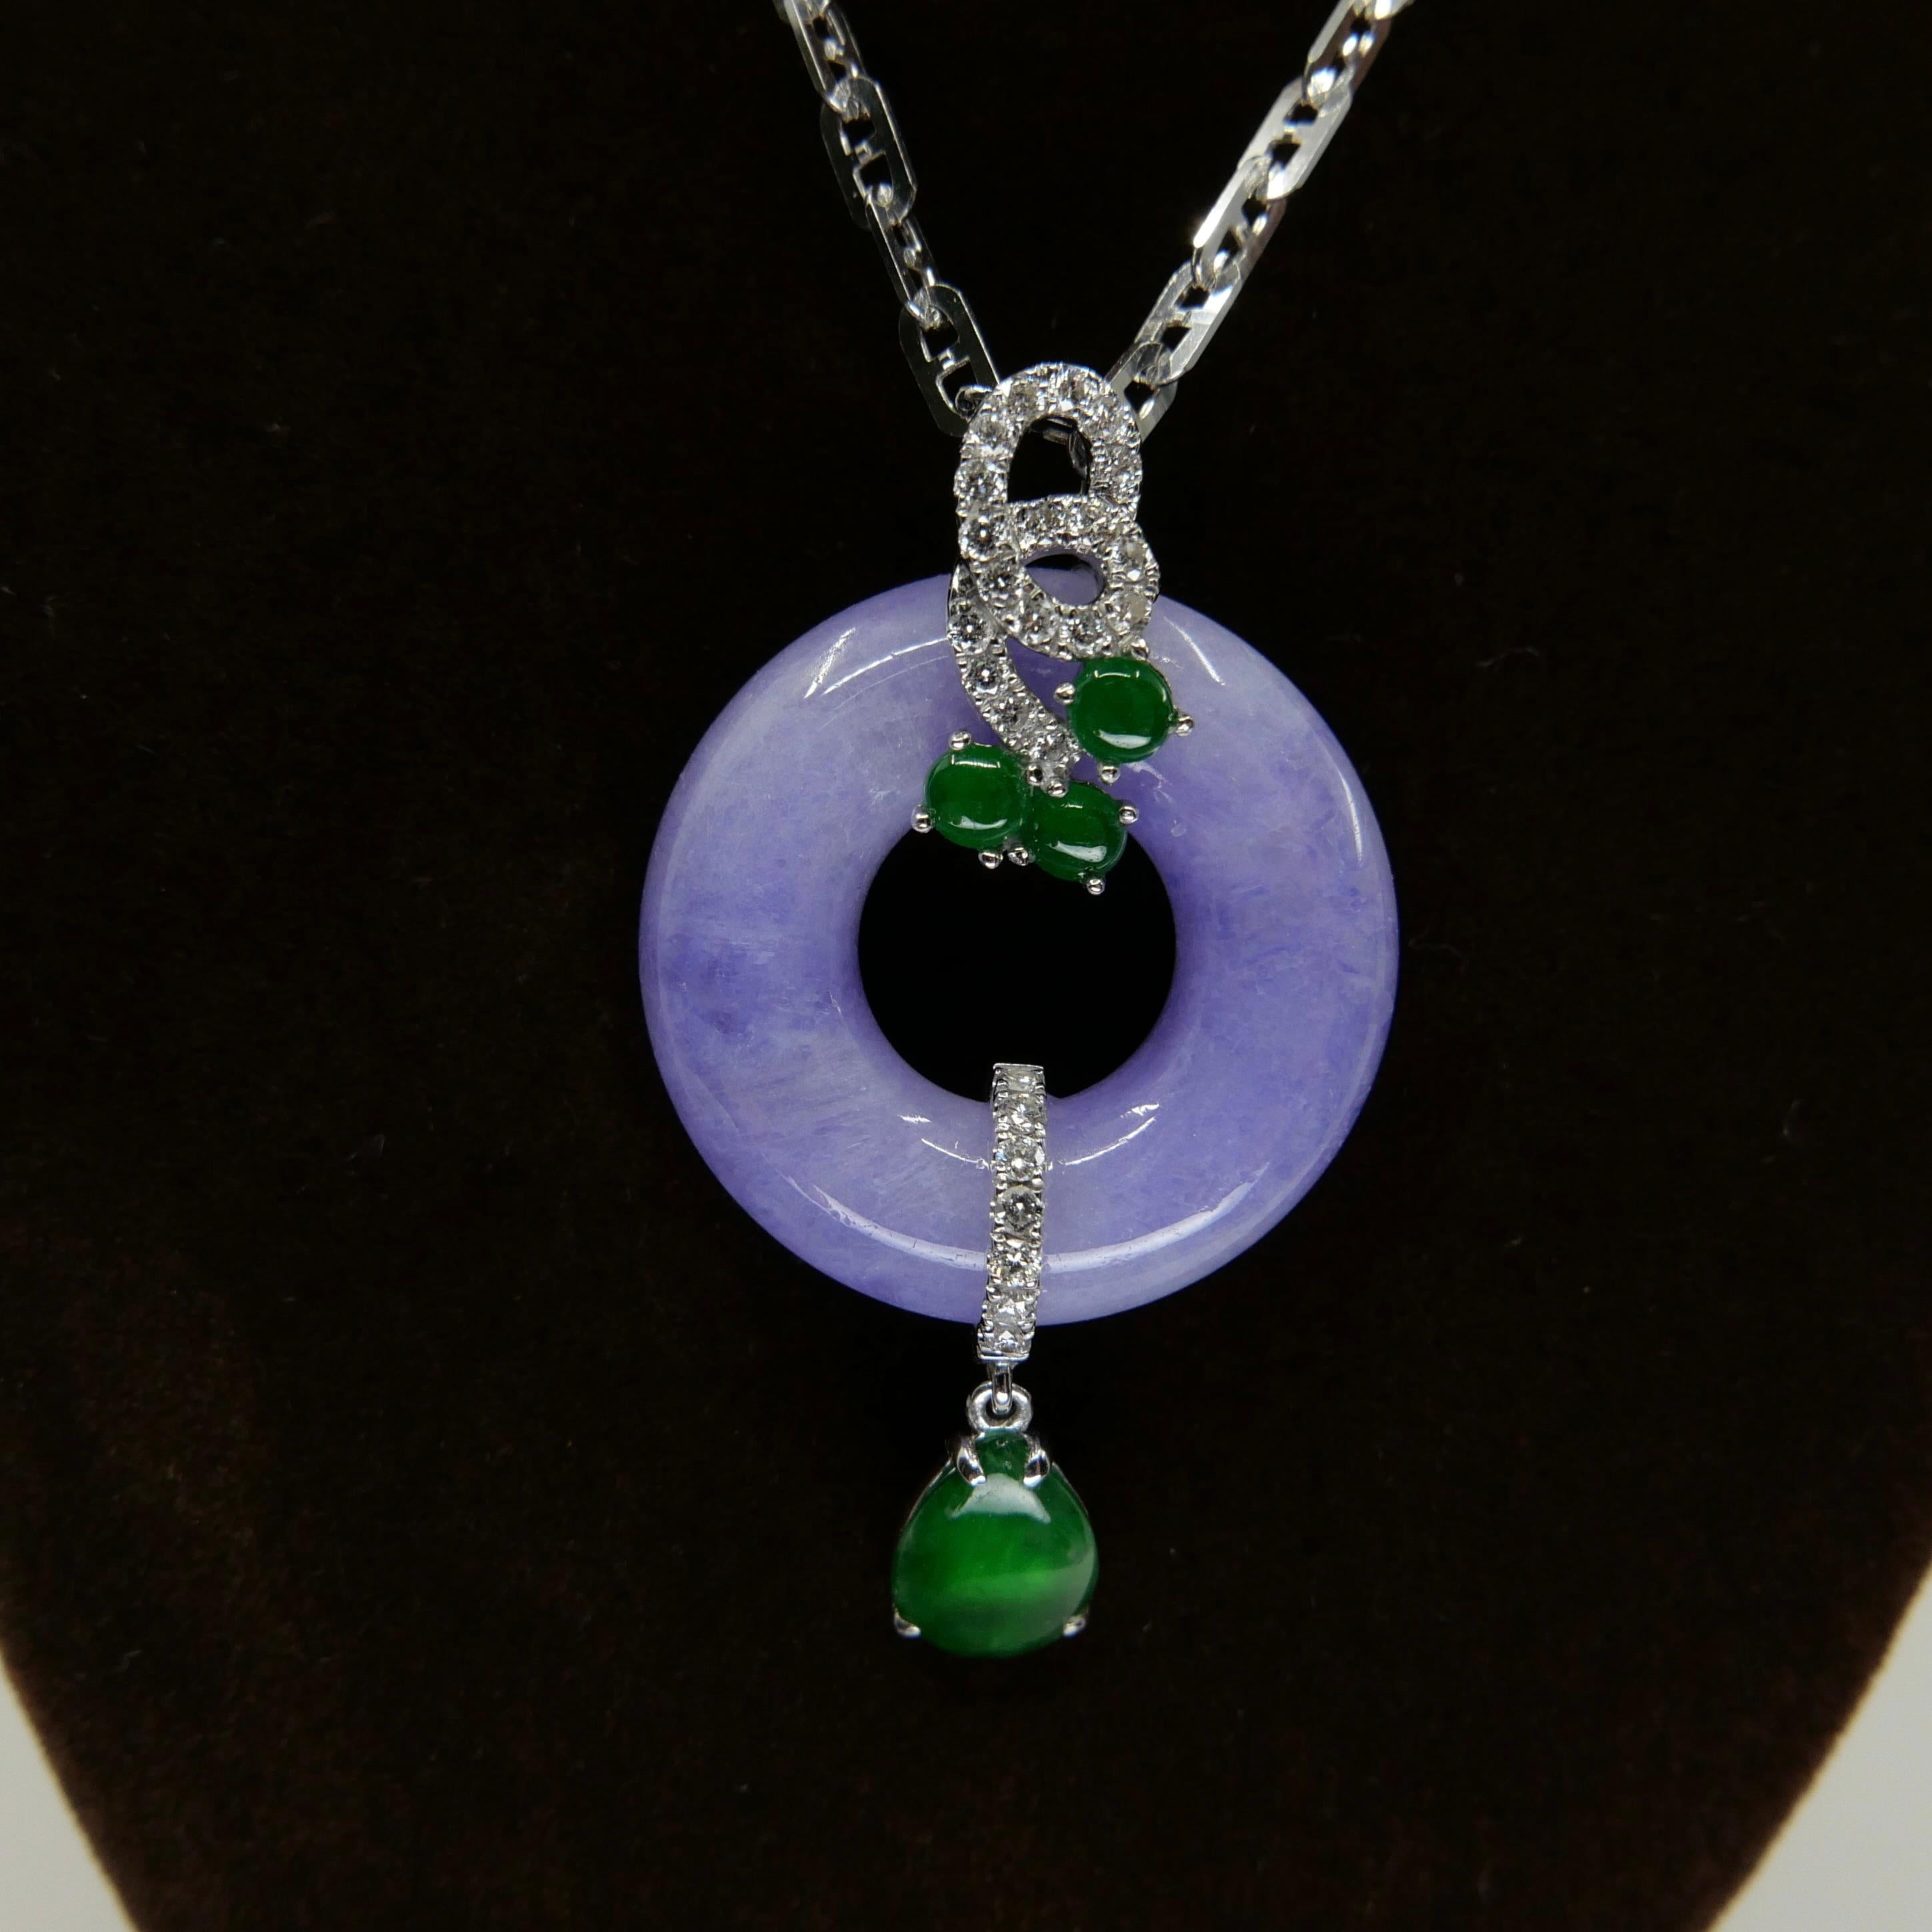 Certified Lavender & Imperial Green Jade Diamond Pendant Drop Necklace.  5